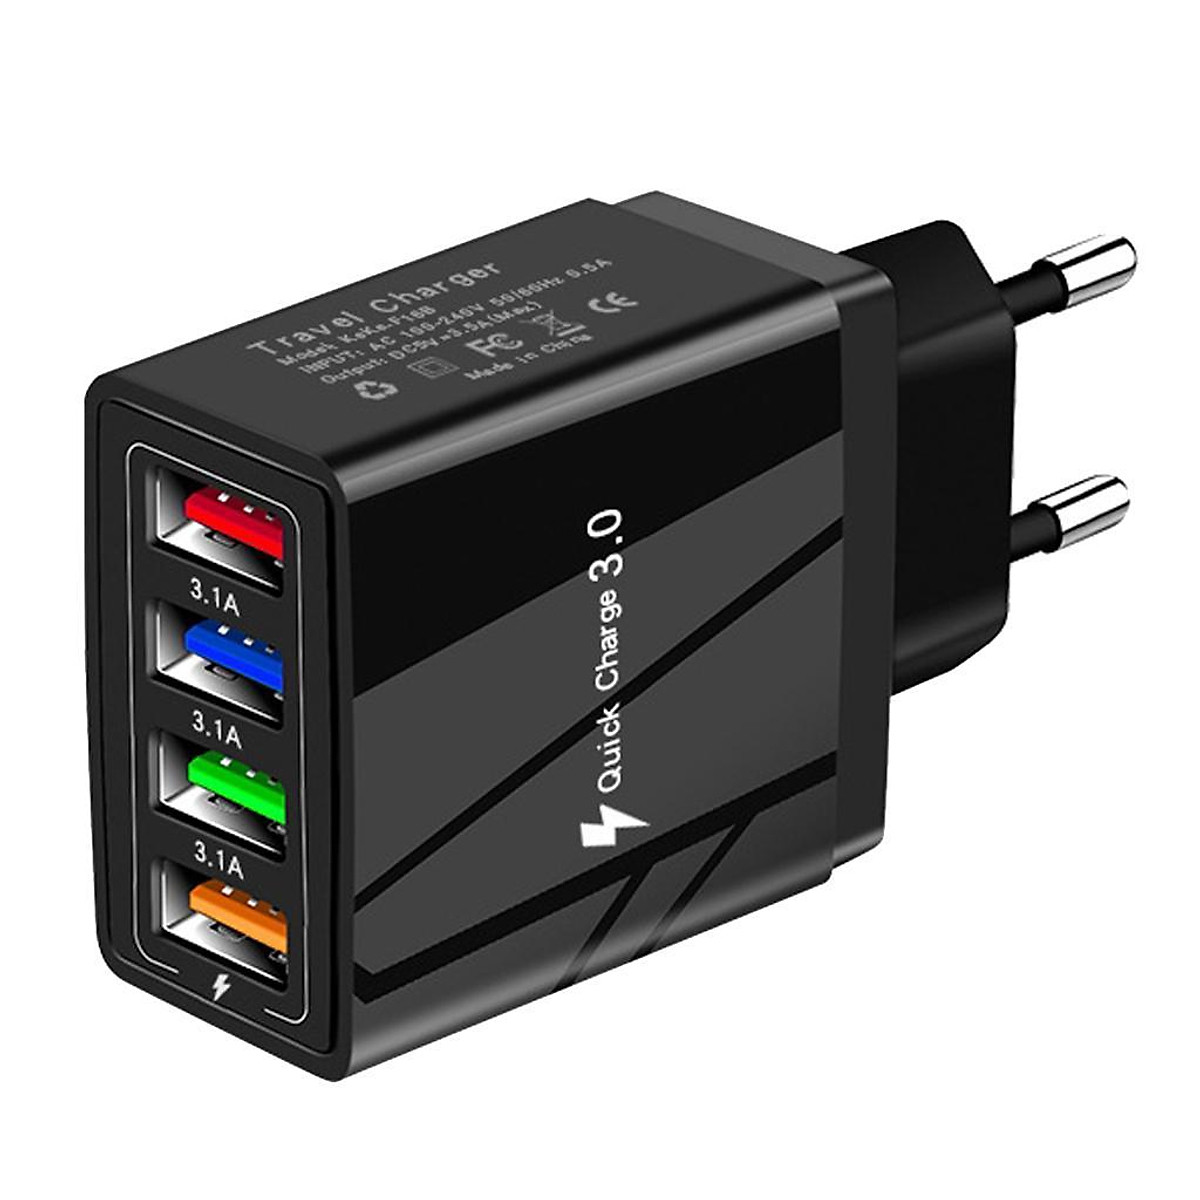 Mua USB Power Adapter Home Wall Charger EU Plug for Phones Charger - Black  tại WonderTECH